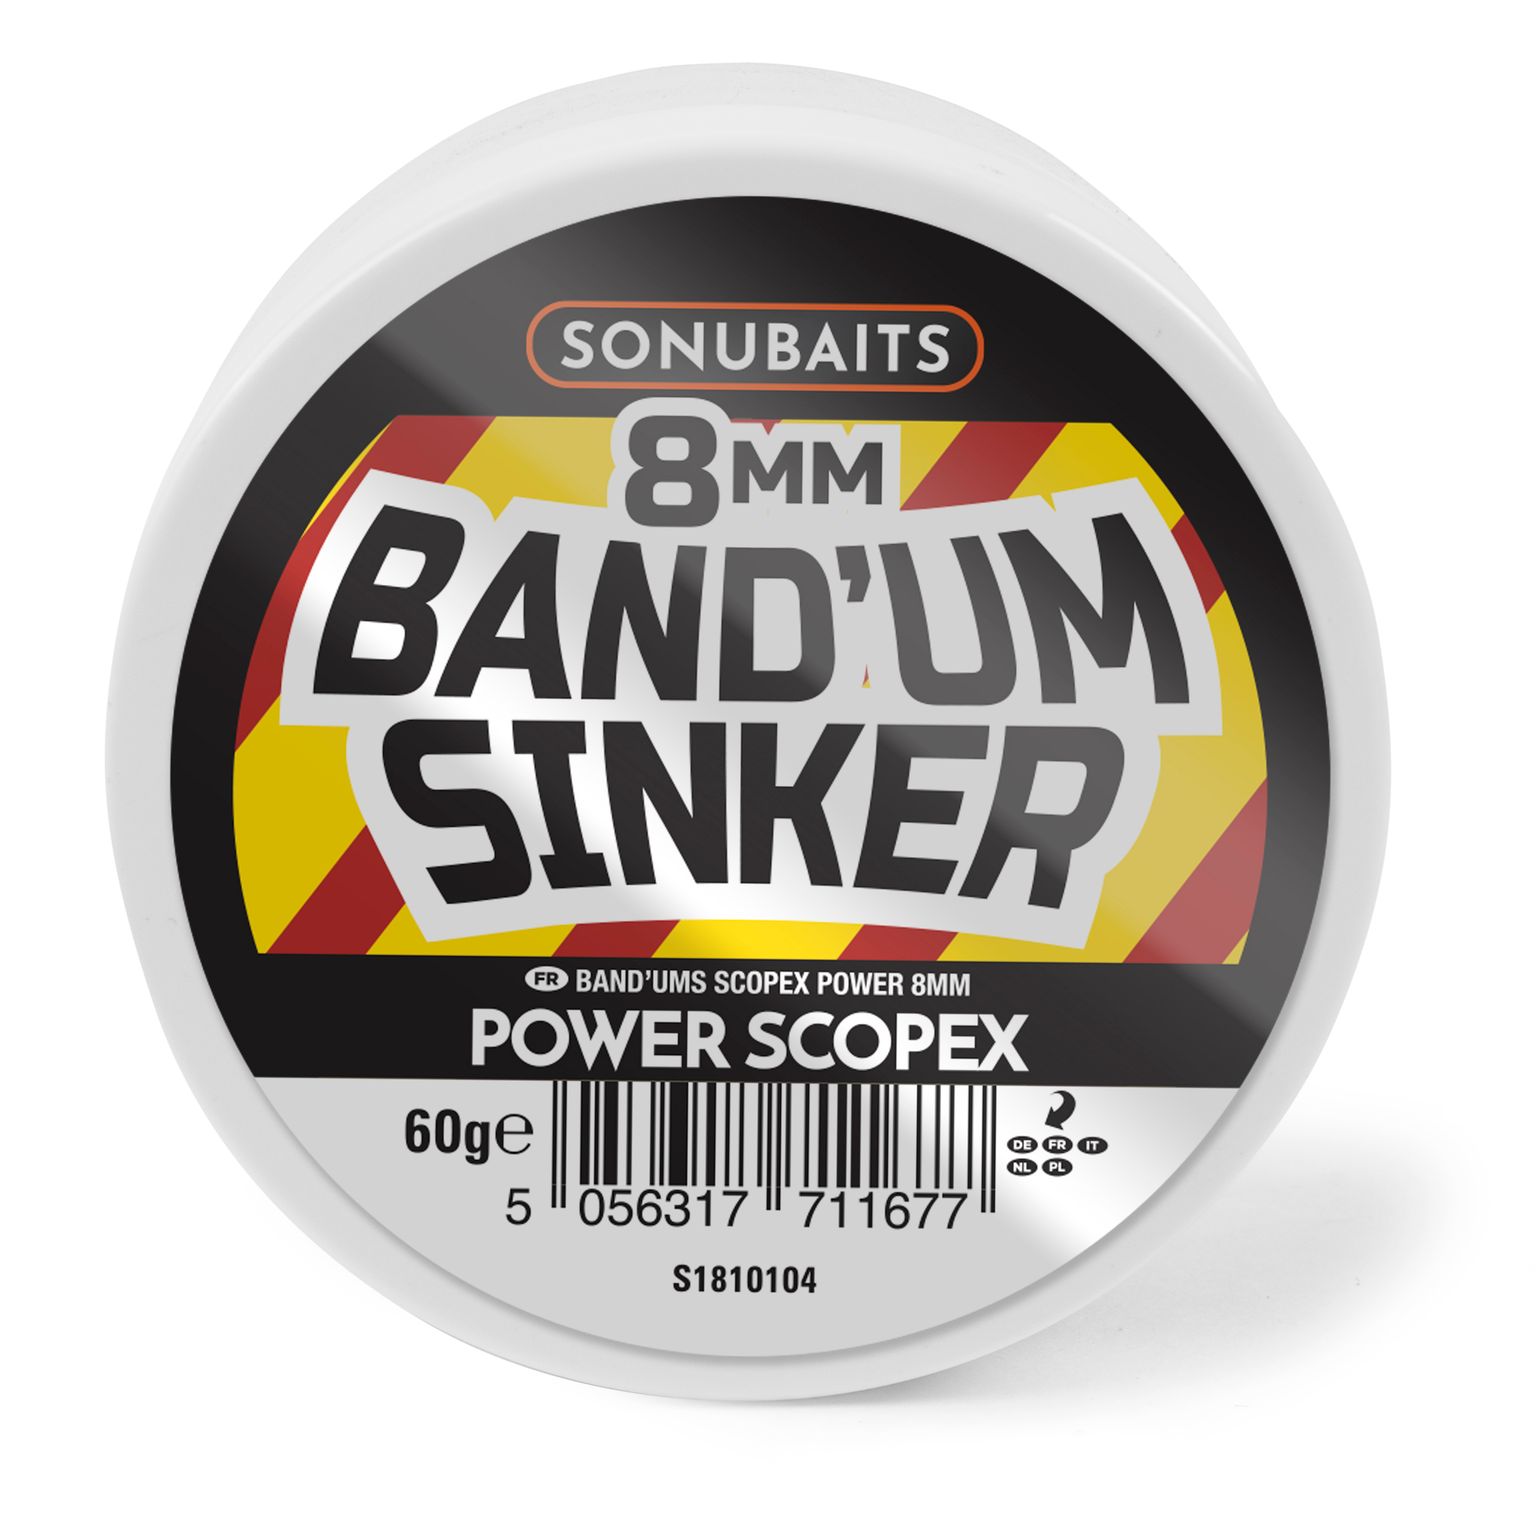 Bouillettes Sonubaits Band'um Sinker 8mm - Power Scopex